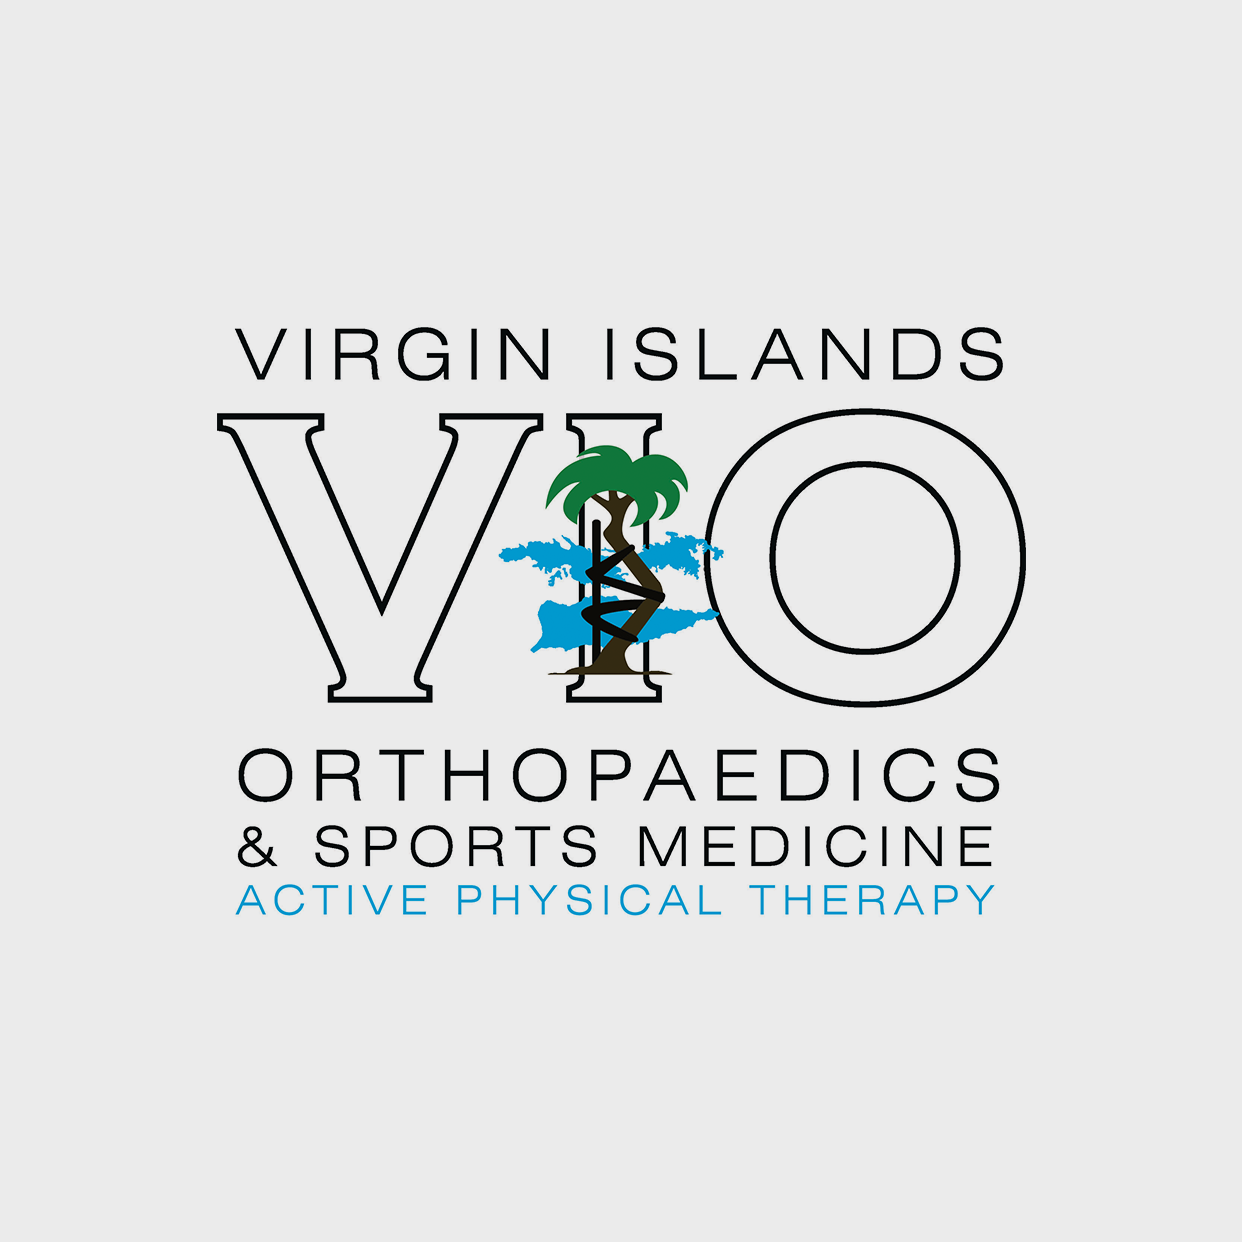 Virgin Islands Orthopaedics and Sports Medicine